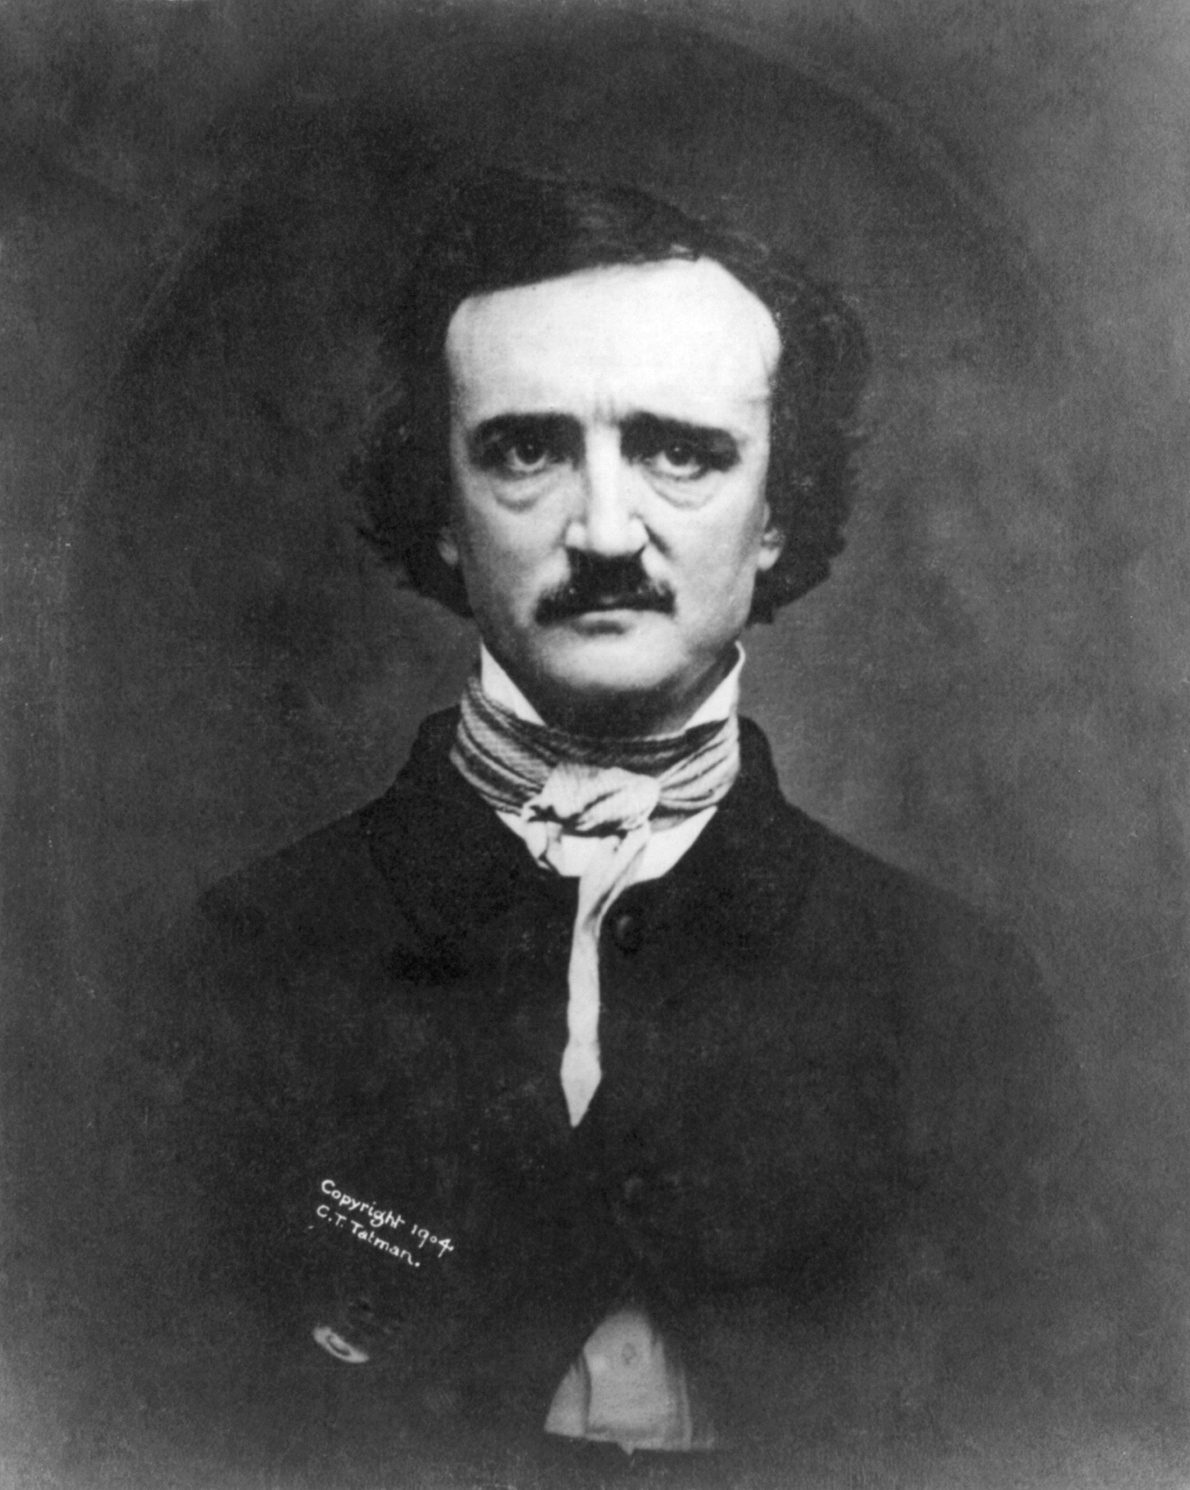 portrait of Edgar Allan Poe